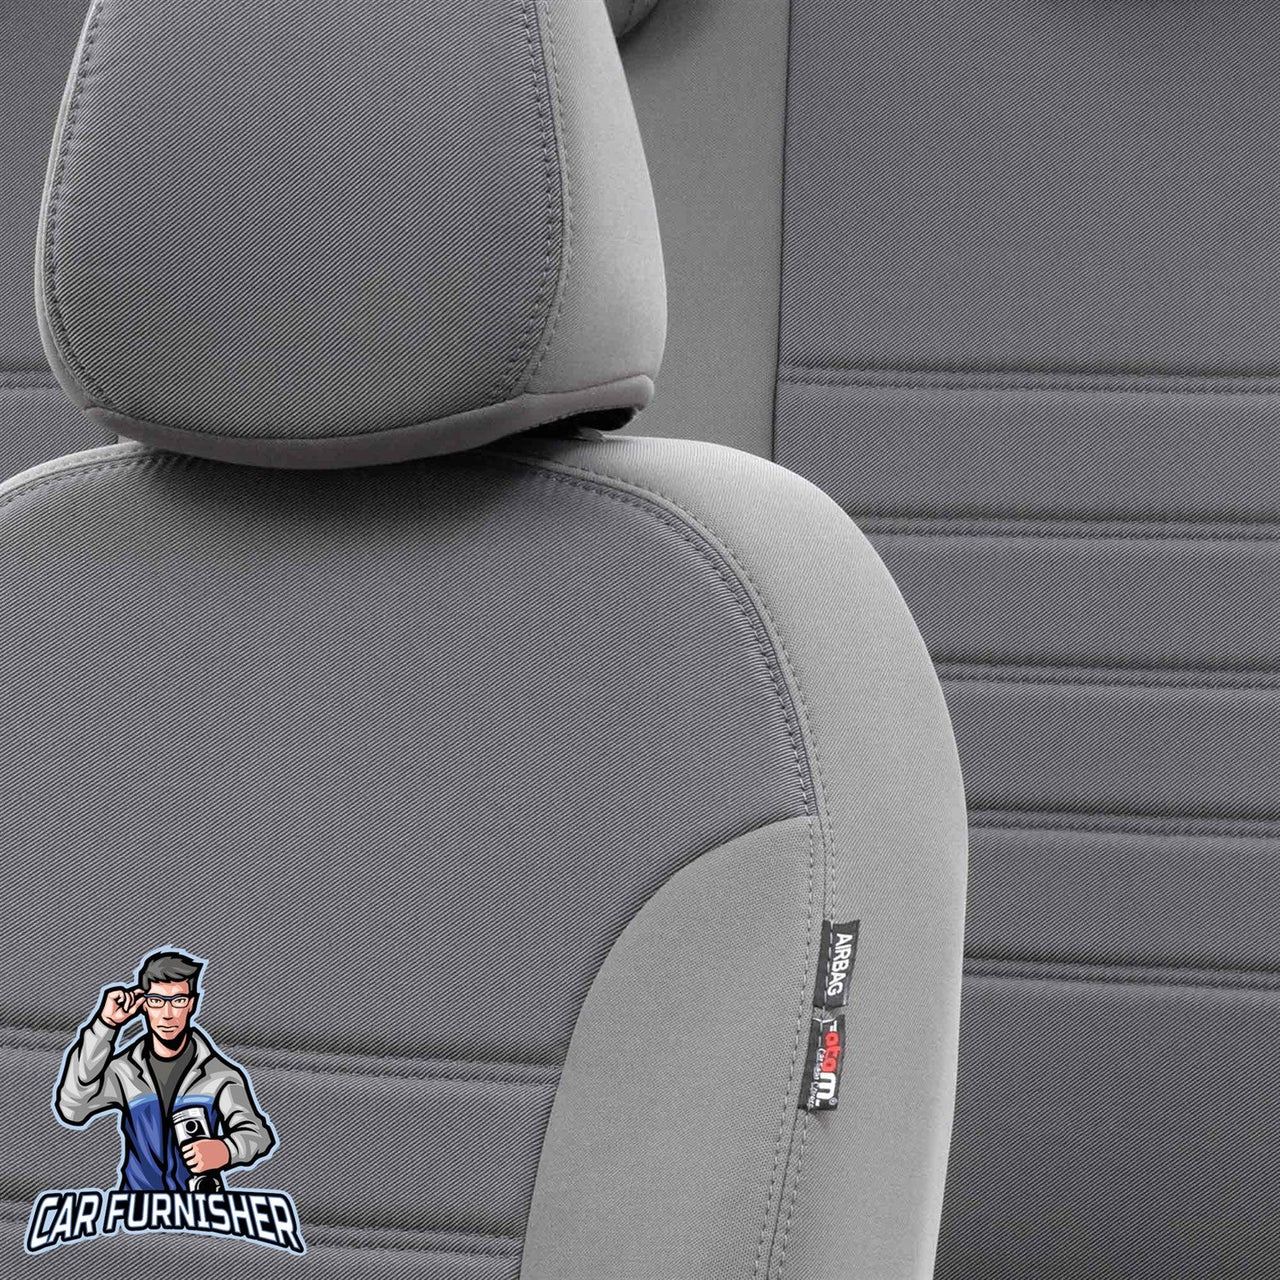 Volkswagen Caddy Seat Cover Original Jacquard Design Gray Jacquard Fabric